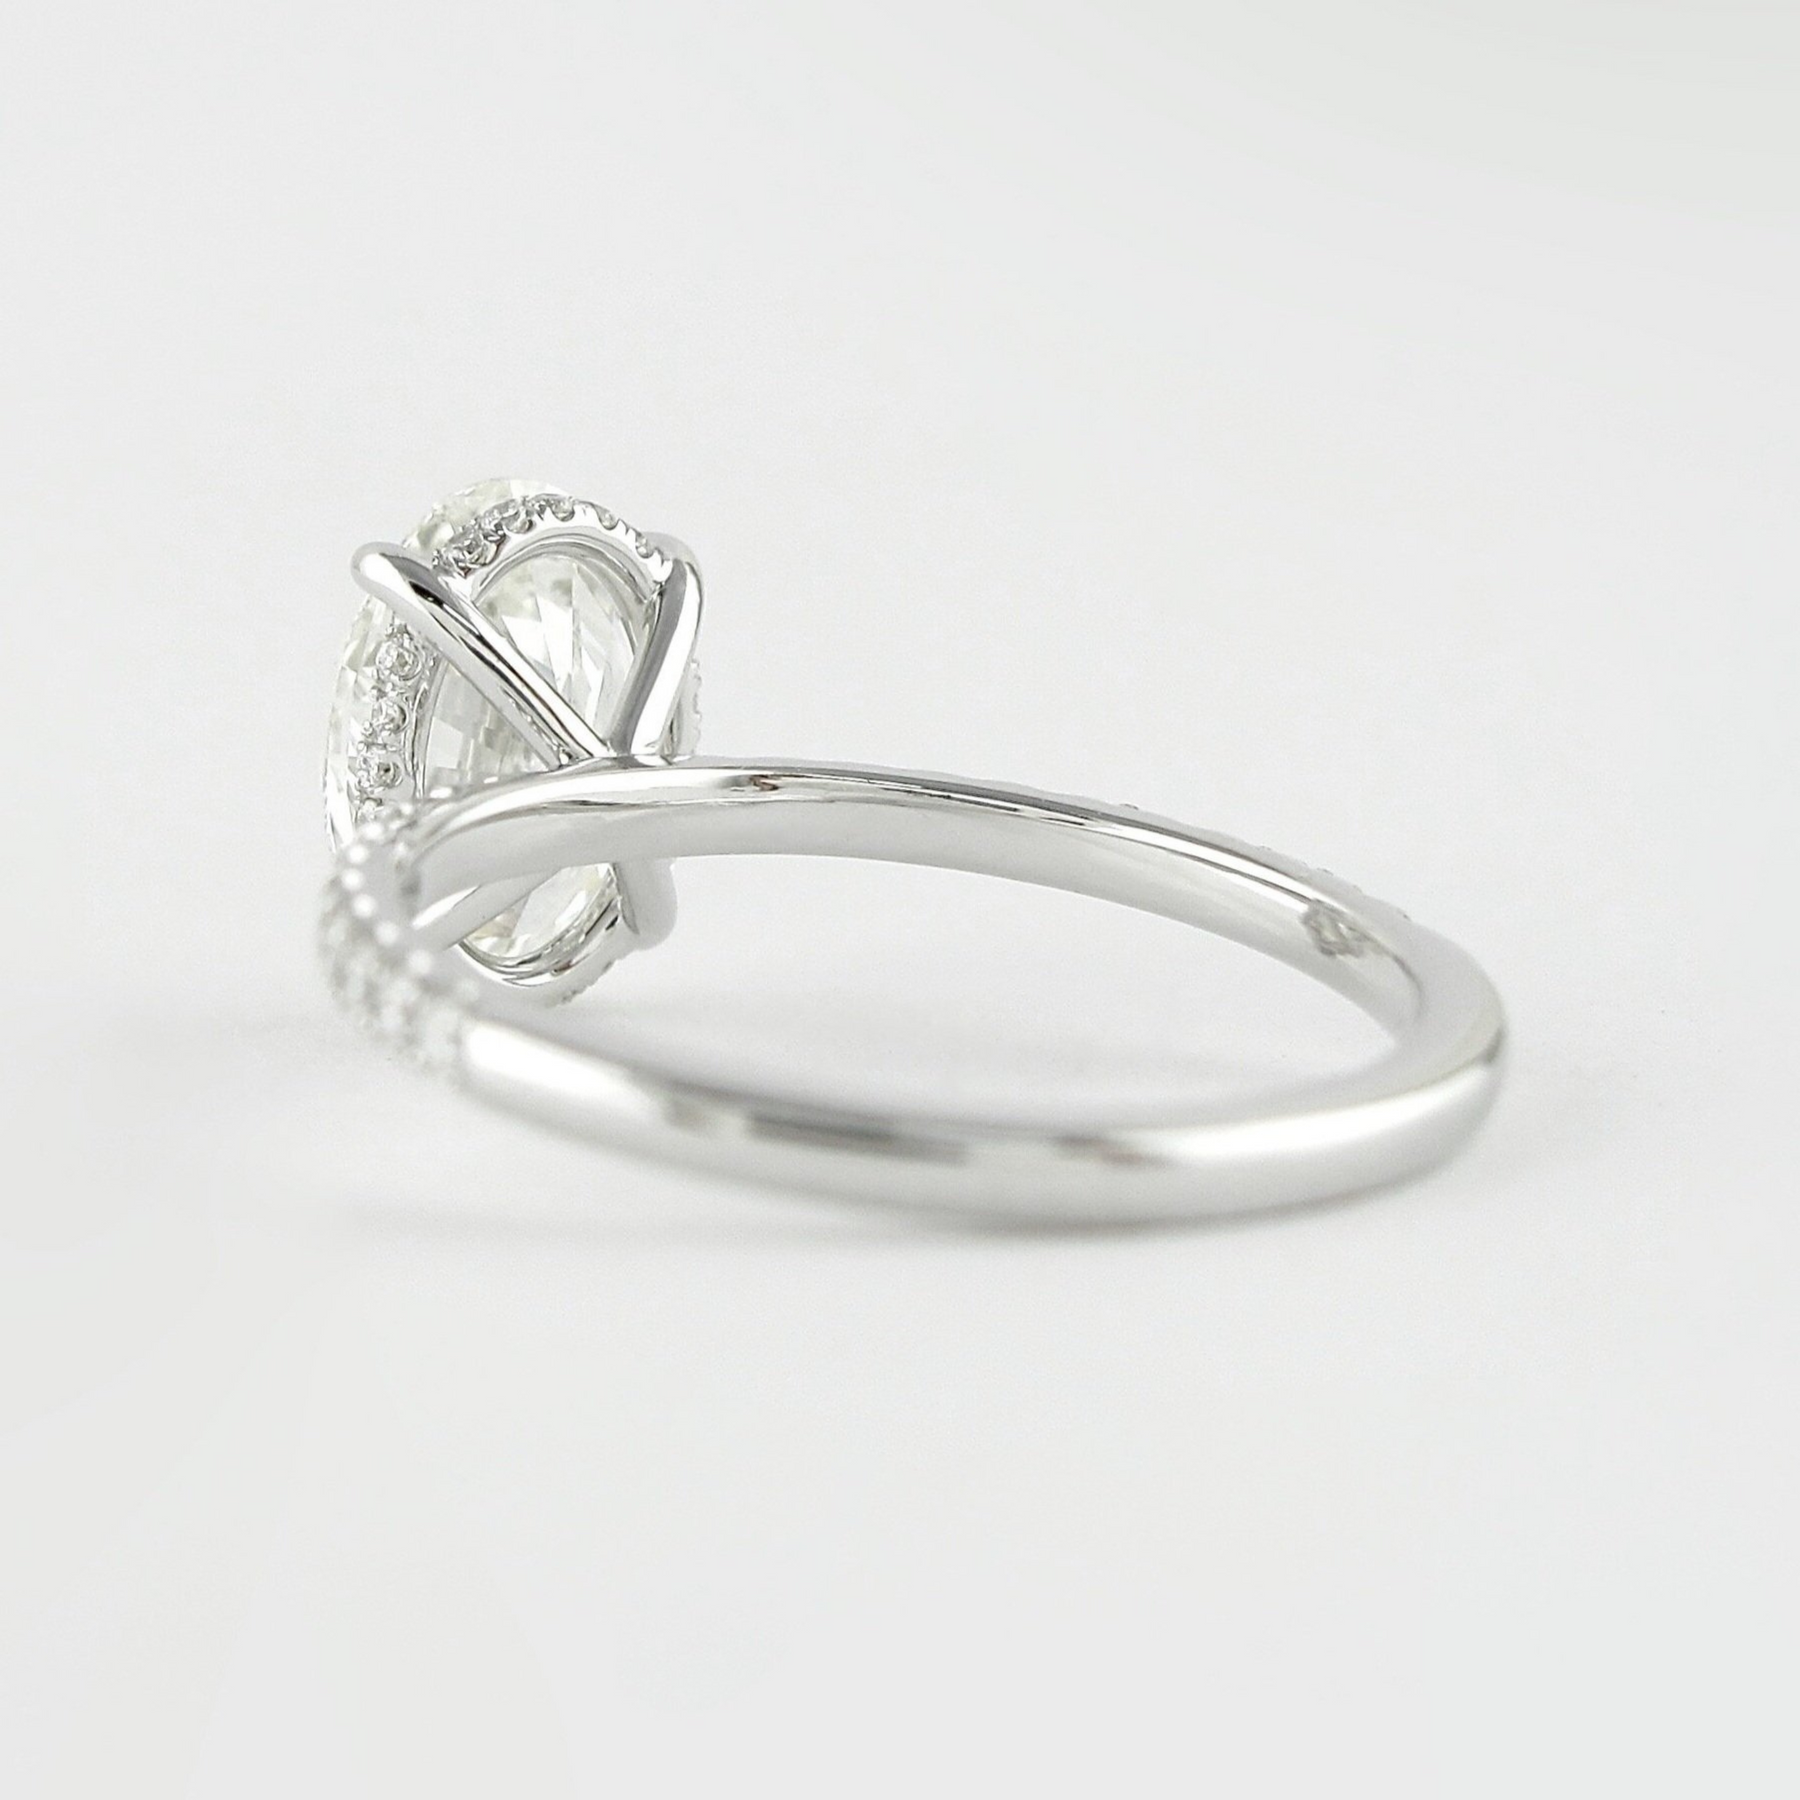 2.50 Carat Oval Cut Prong set Diamond Wedding Ring with Hidden Halo & Pave Diamond Band